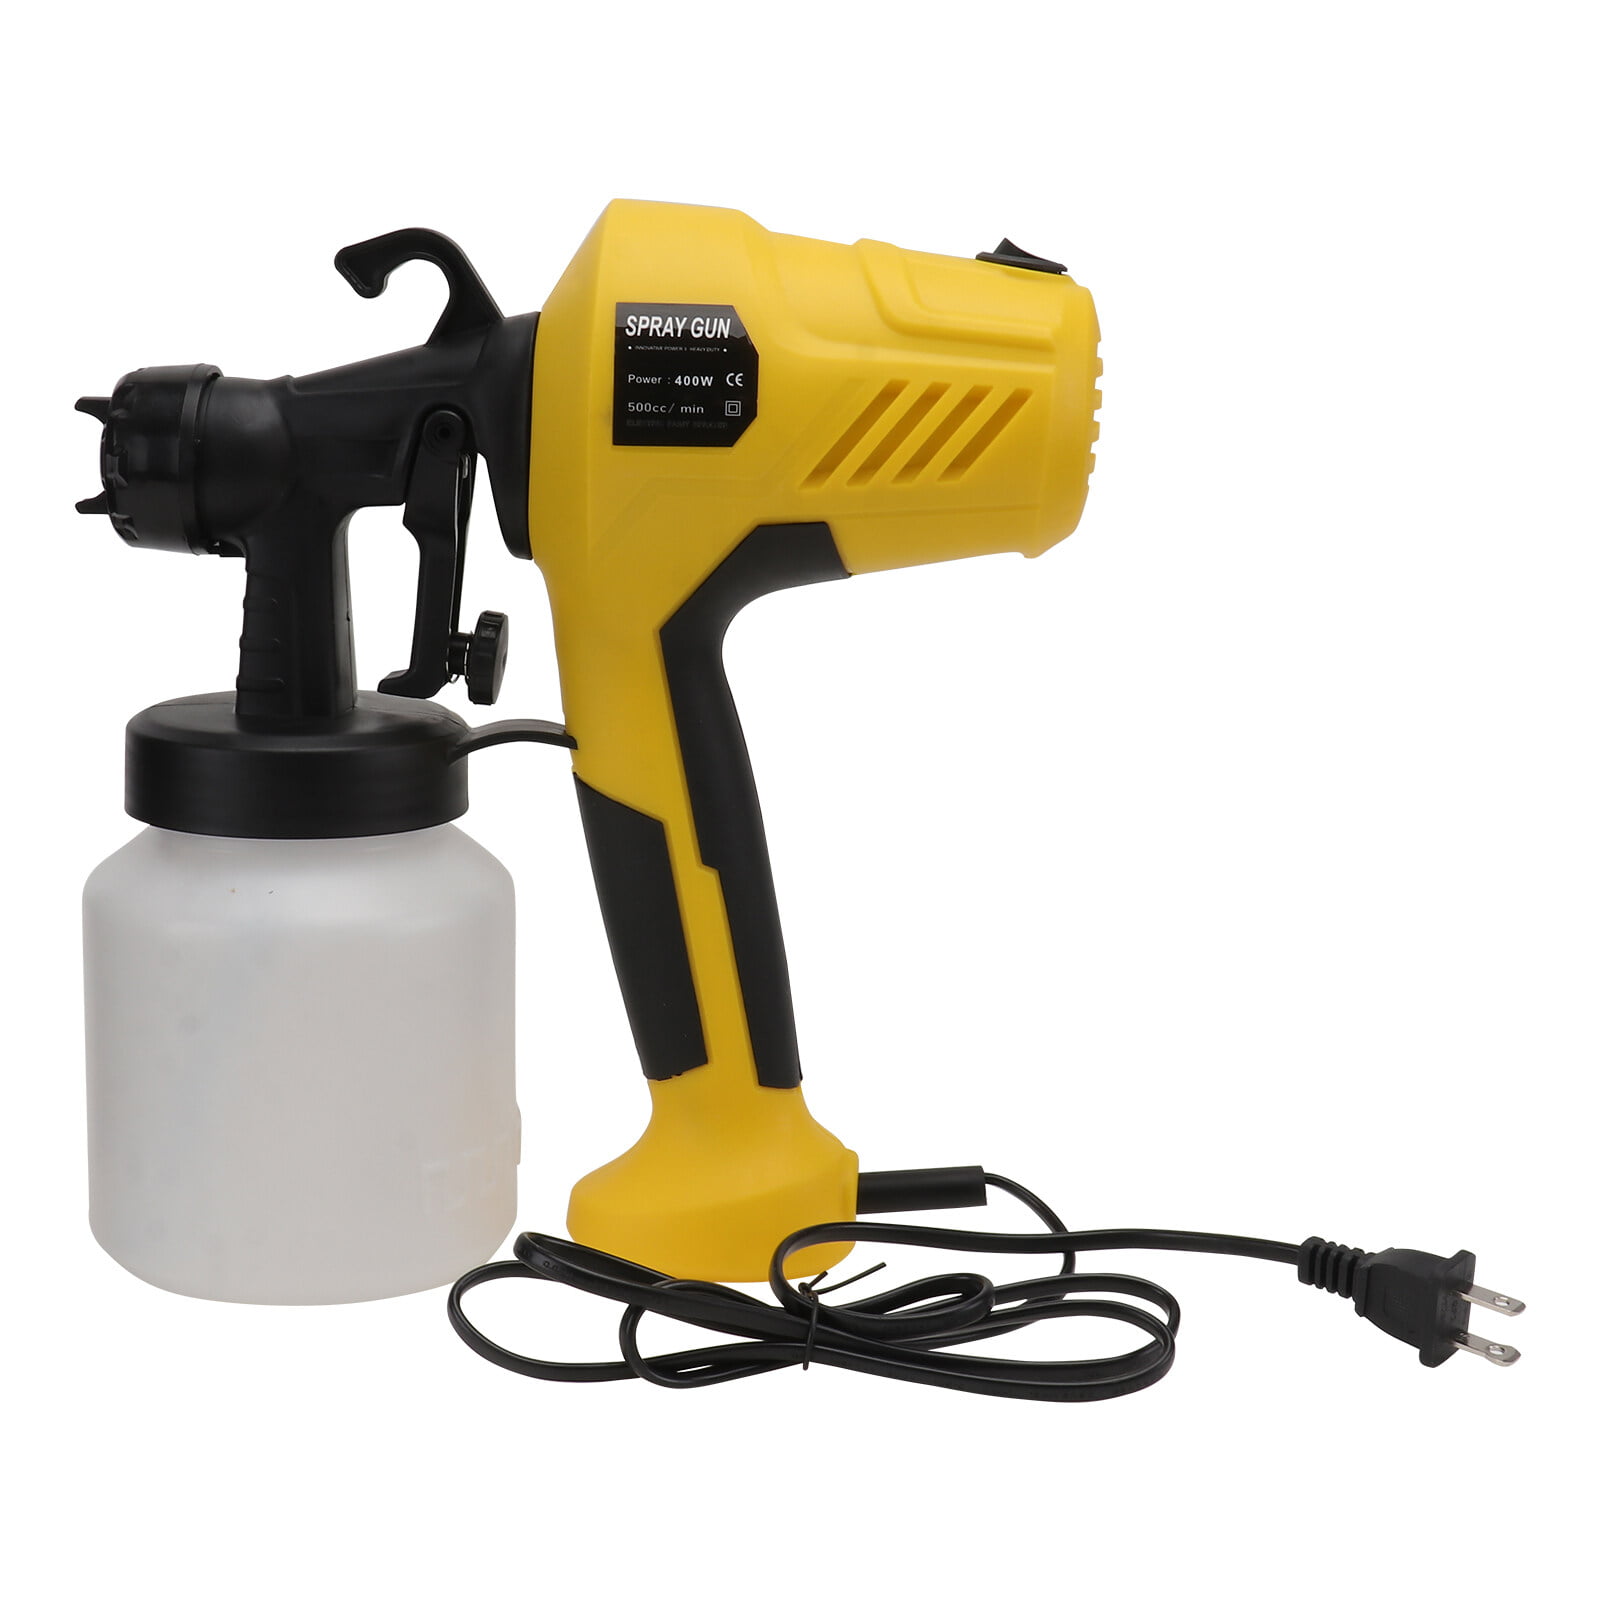 WorkPro Plus 14GPH Electric Paint Sprayer,120 Volt, Model 2234 